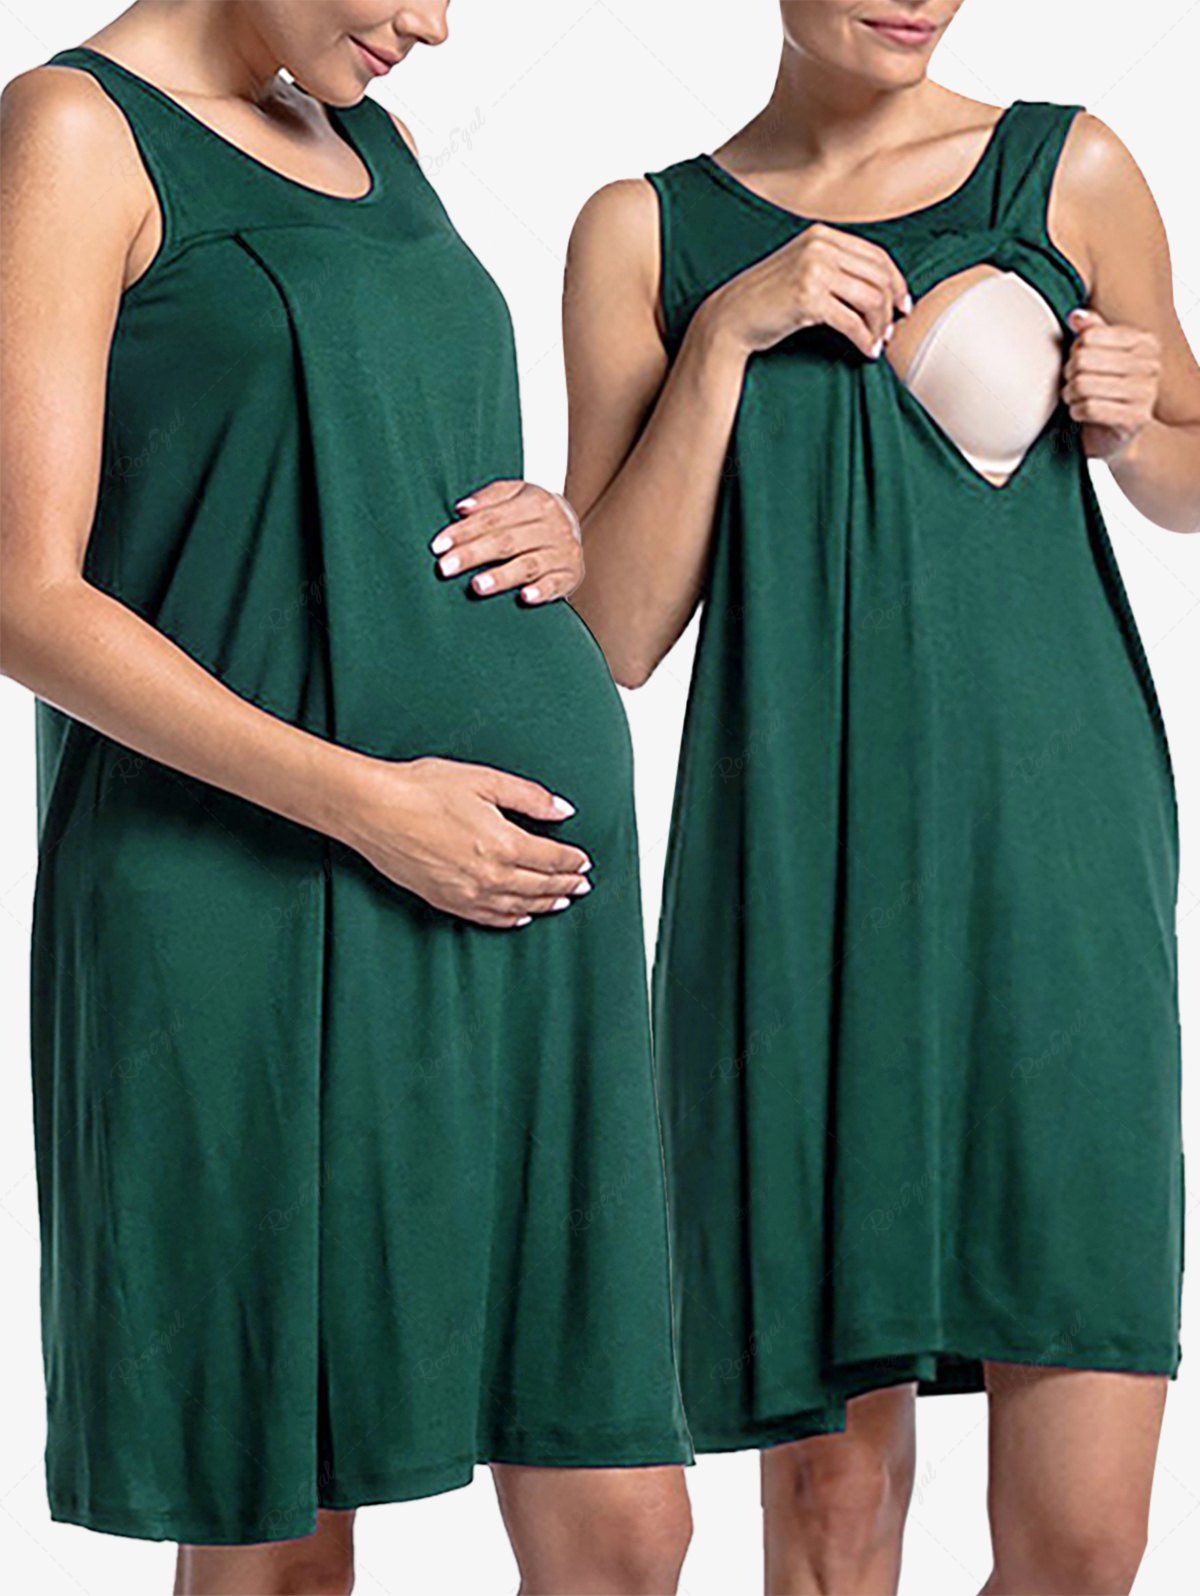 Plus Size Sleeveless Solid Color Ripped Tank Maternity Nursing Dress Bleu 2XL